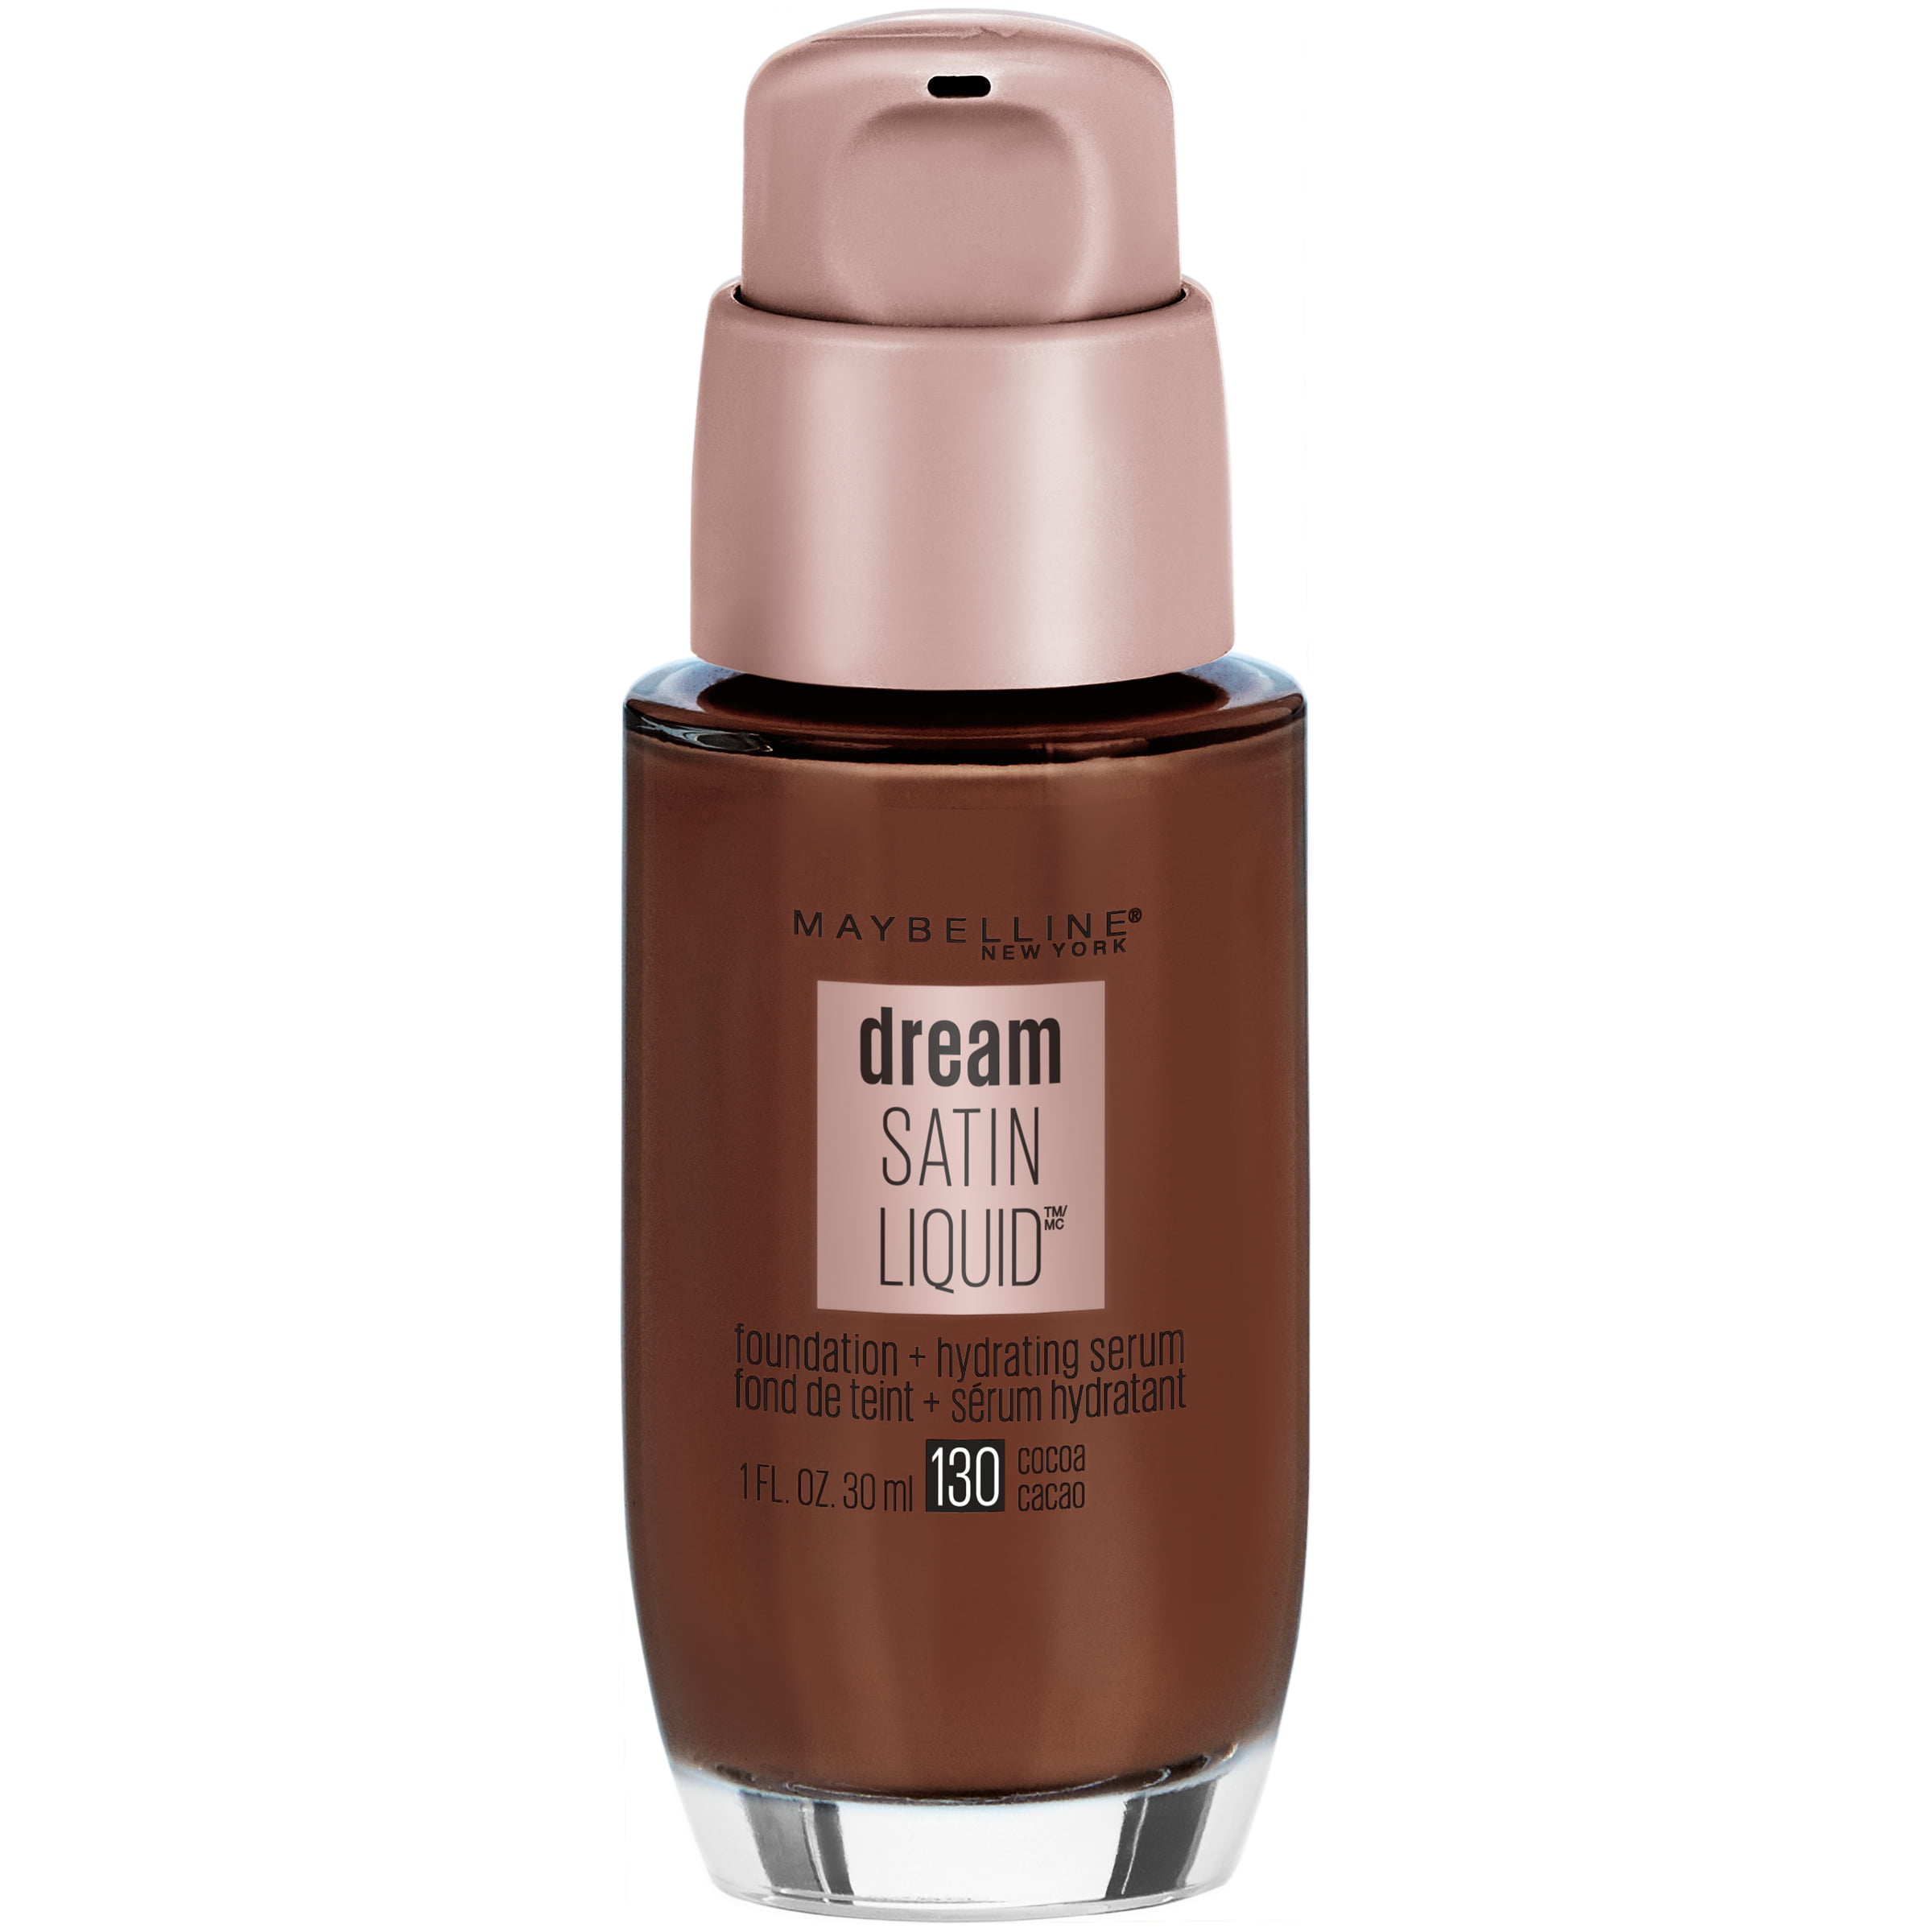 Maybelline Dream Satin Liquid Foundation Makeup for All Skin, Cocoa, 1 fl oz - image 1 of 6